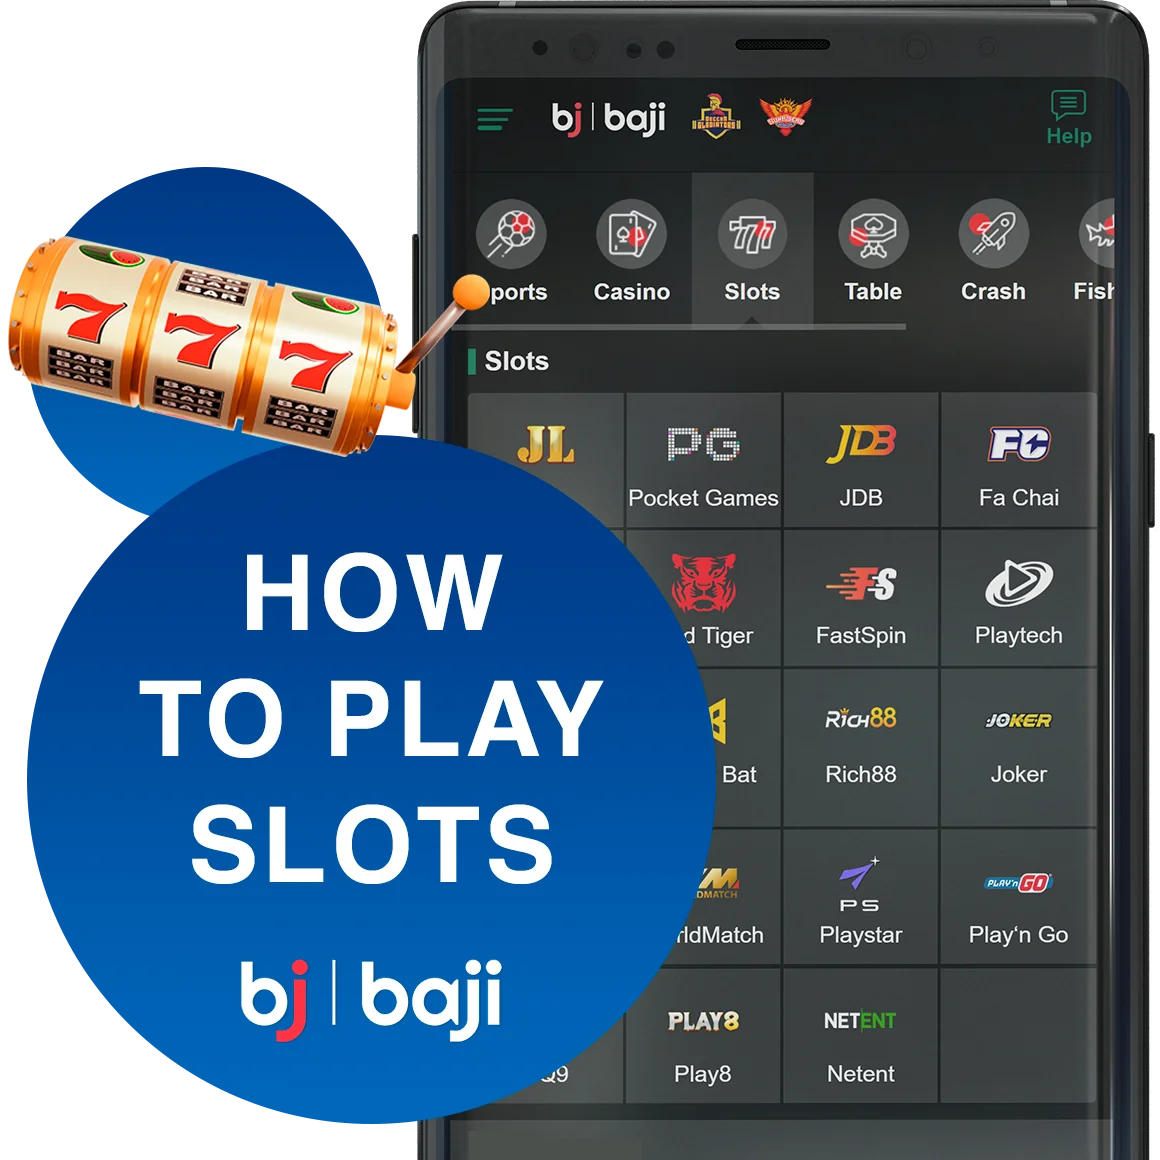 How to Play Slots at Baji Application - Full Instruction